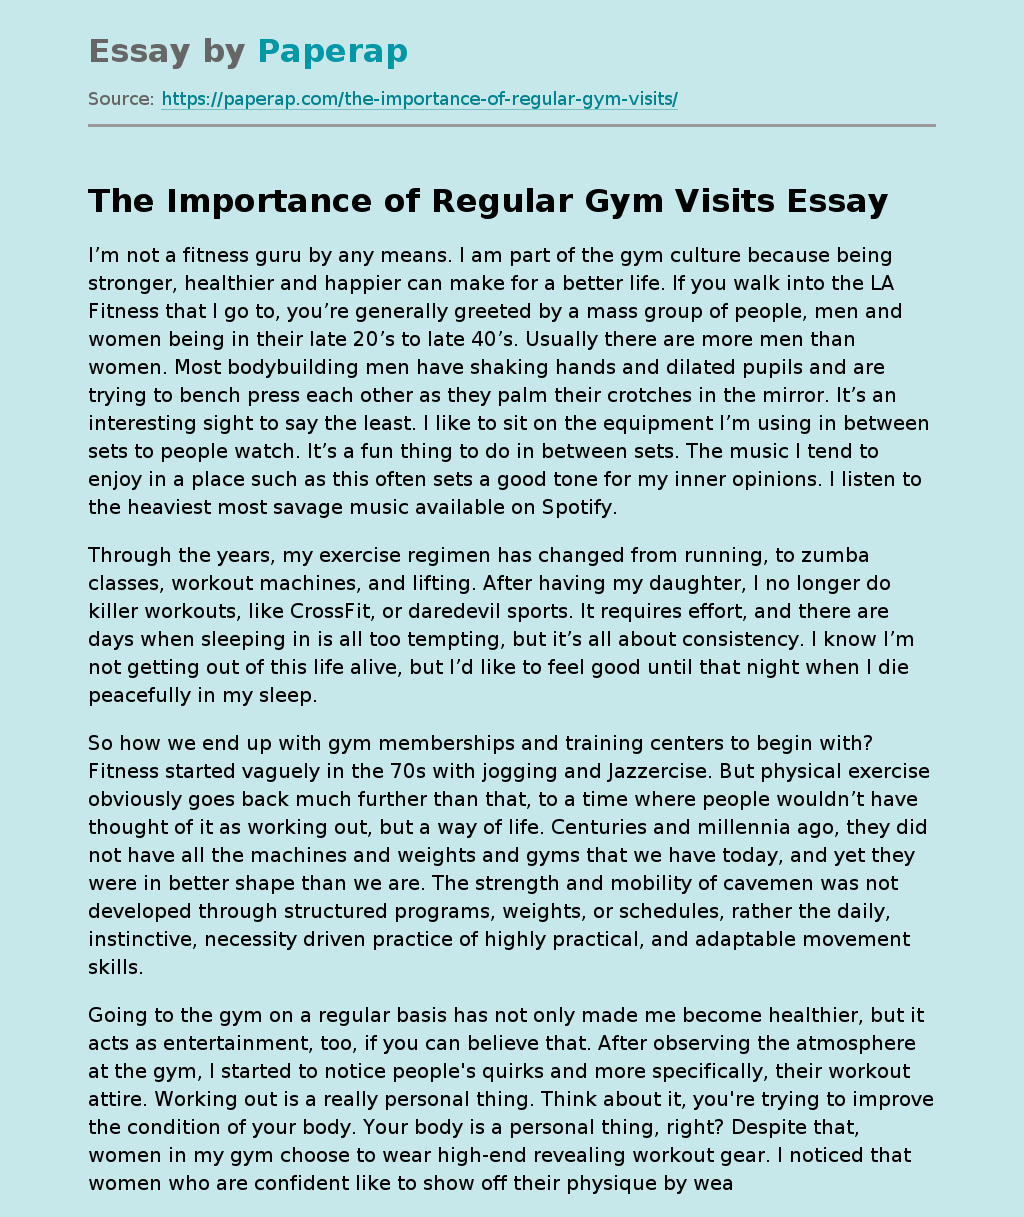 The Importance of Regular Gym Visits